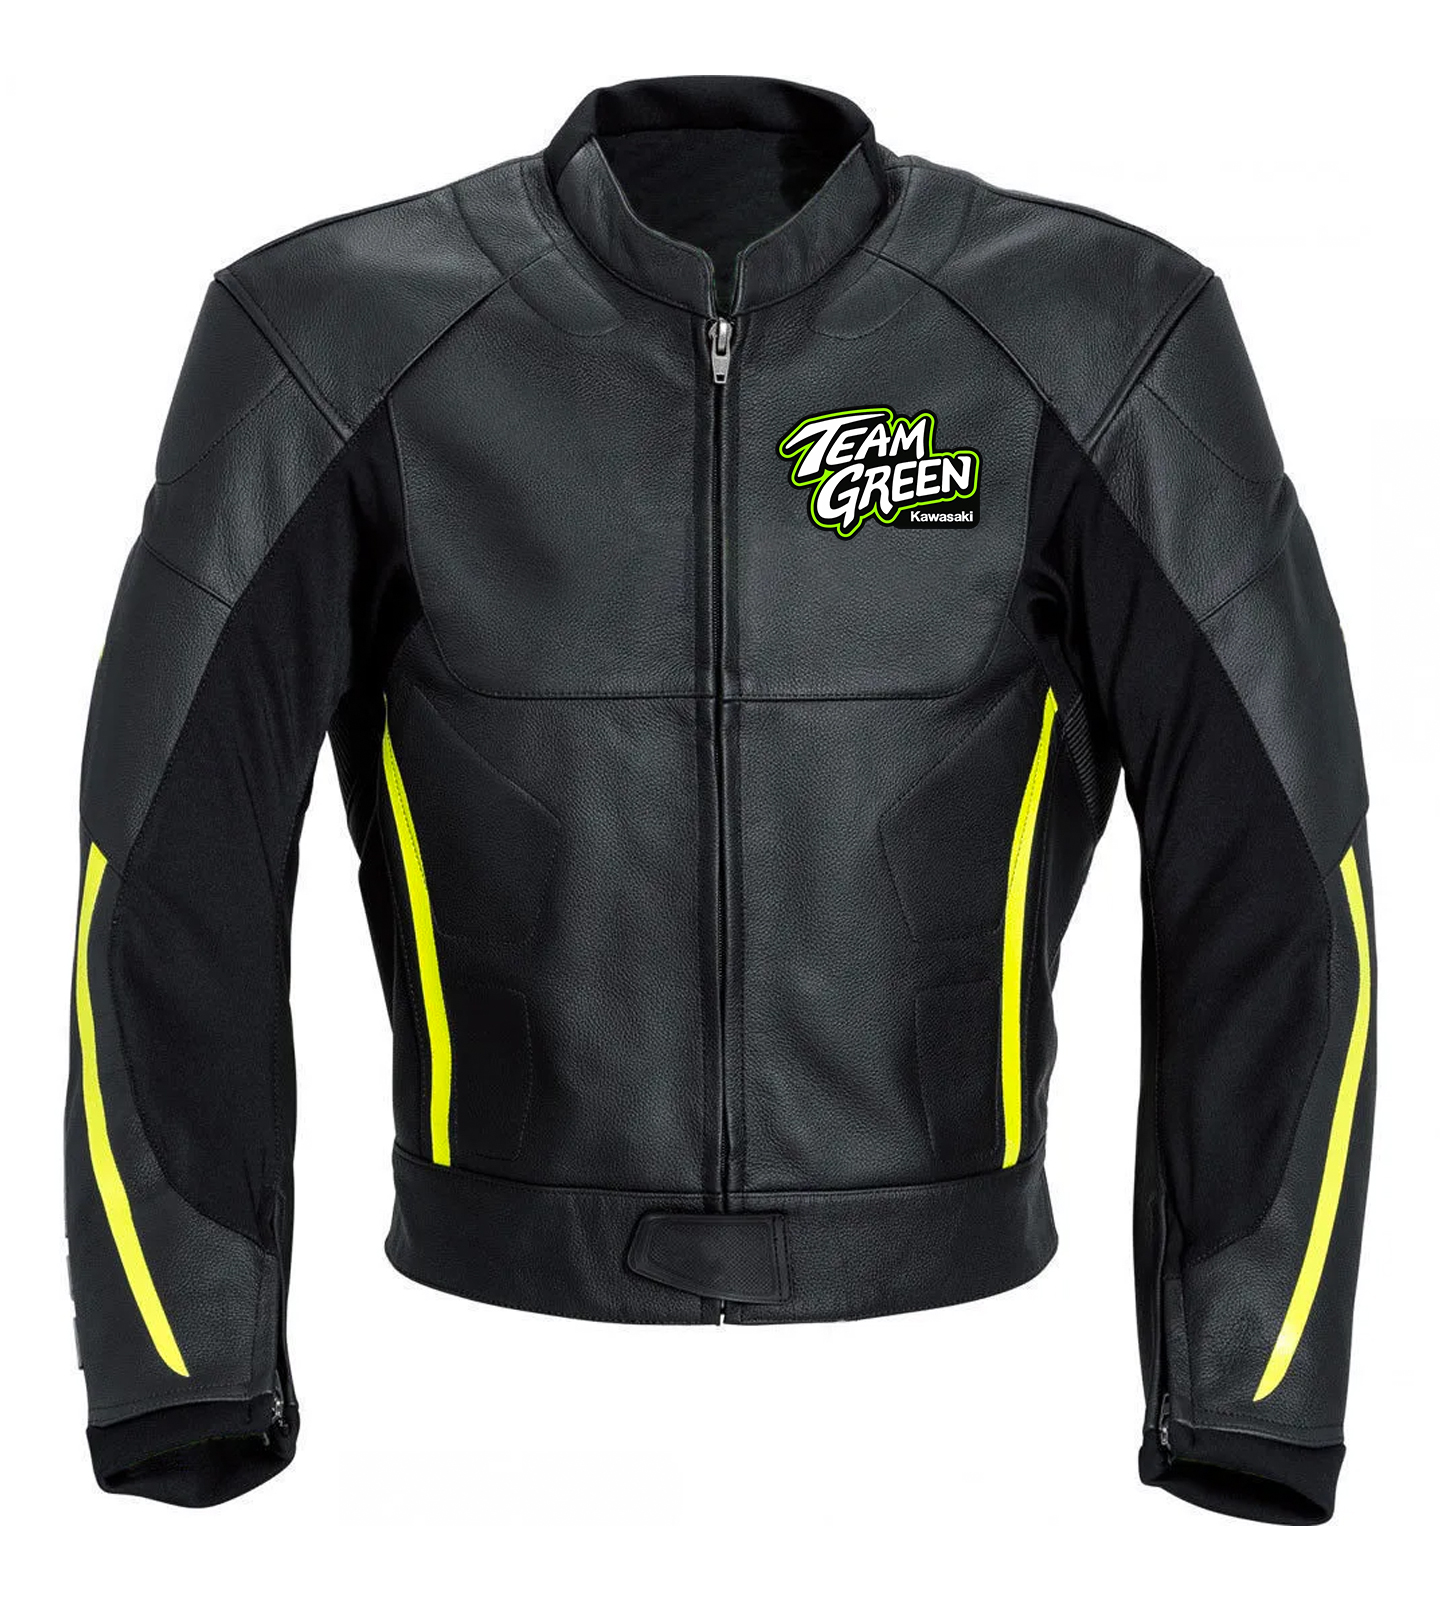 Kawasaki Team Green Motorcycle Racing Genuine Leather Jacket